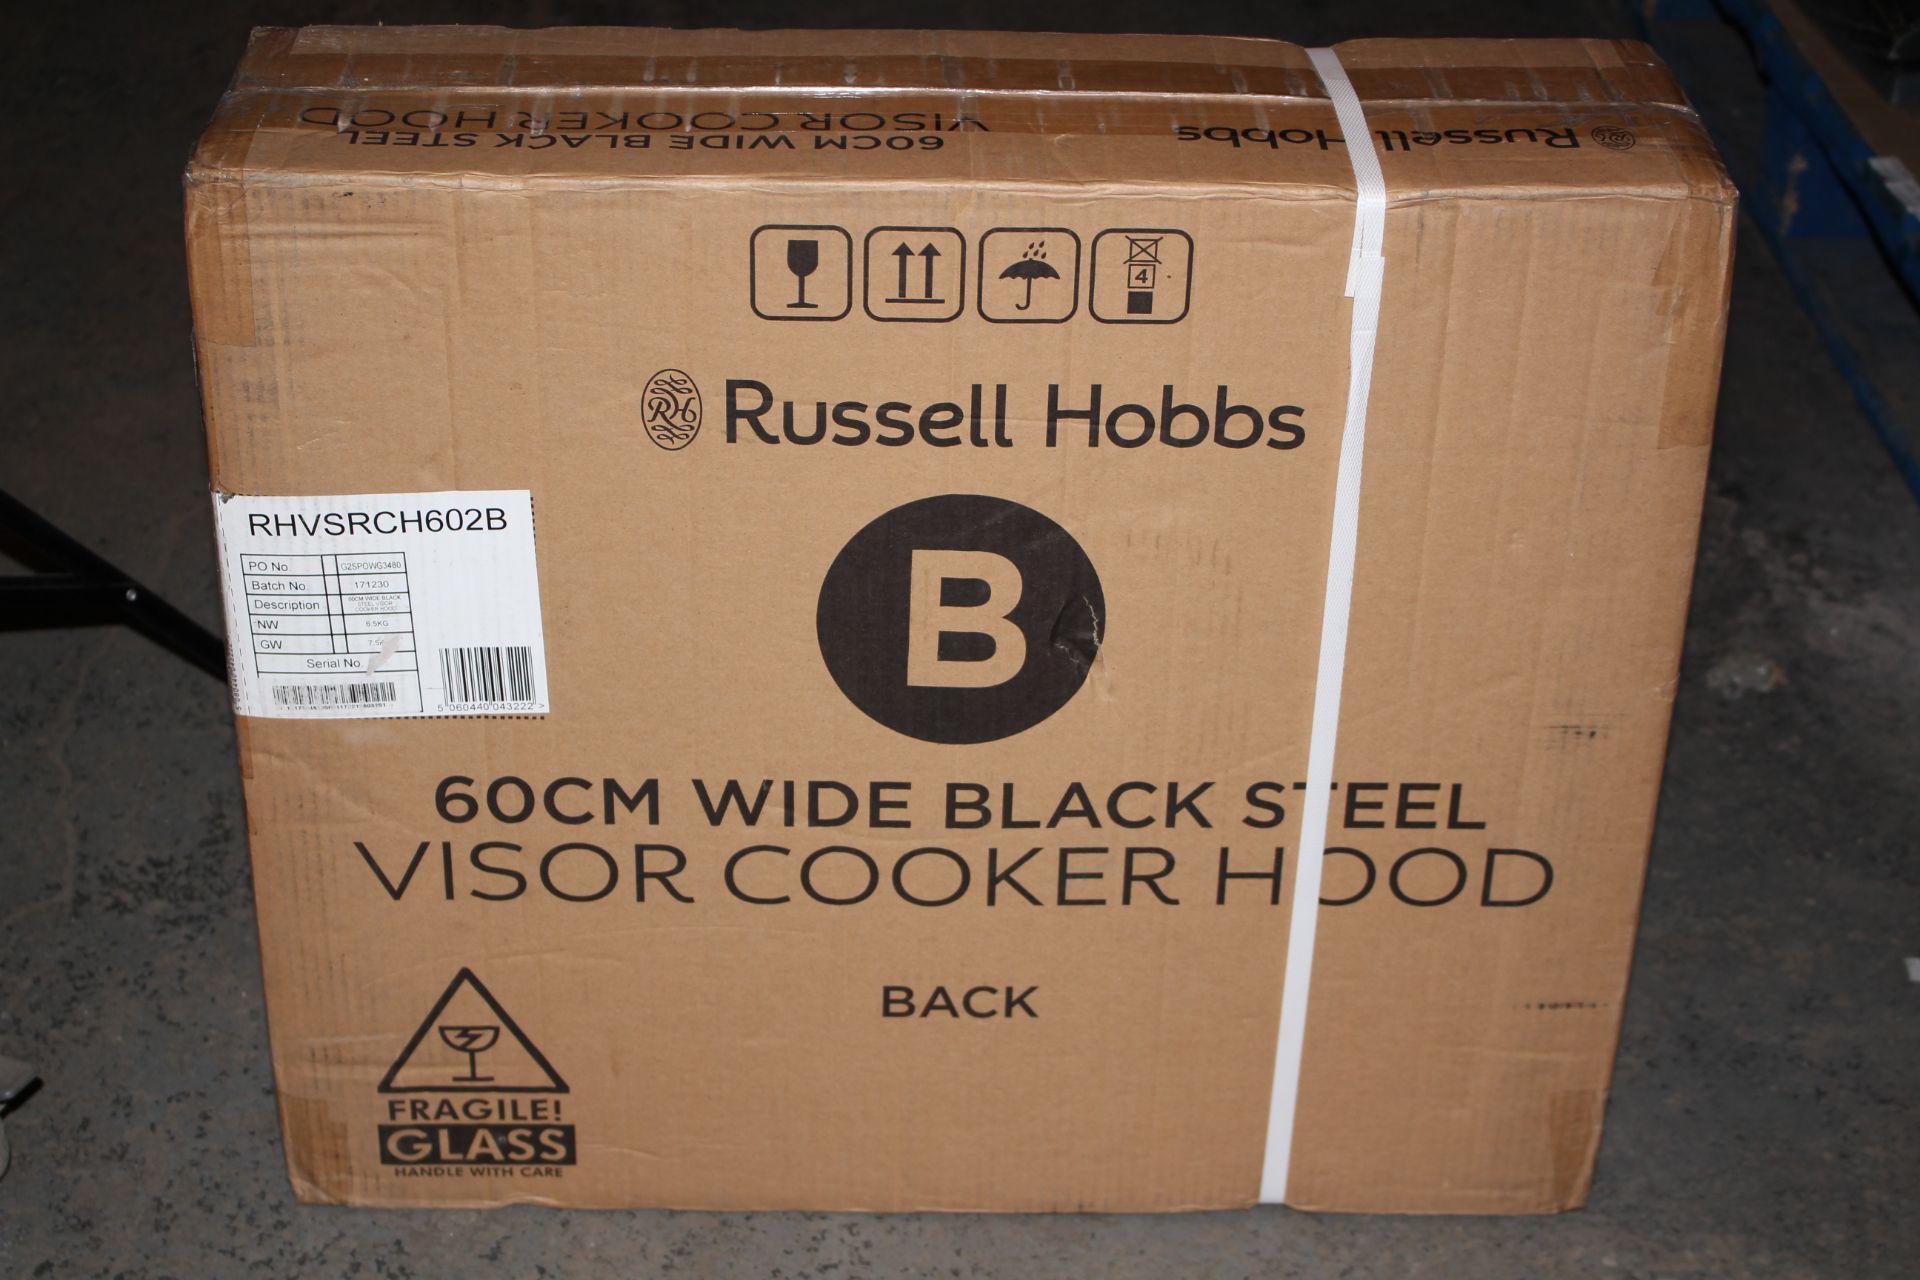 BOXED RUSSELL HOBBS 60CM WIDE BLACK STEEL VISOR COOKER HOOD MODEL: RHVSRCH602B RRP £65.00Condition - Image 2 of 2